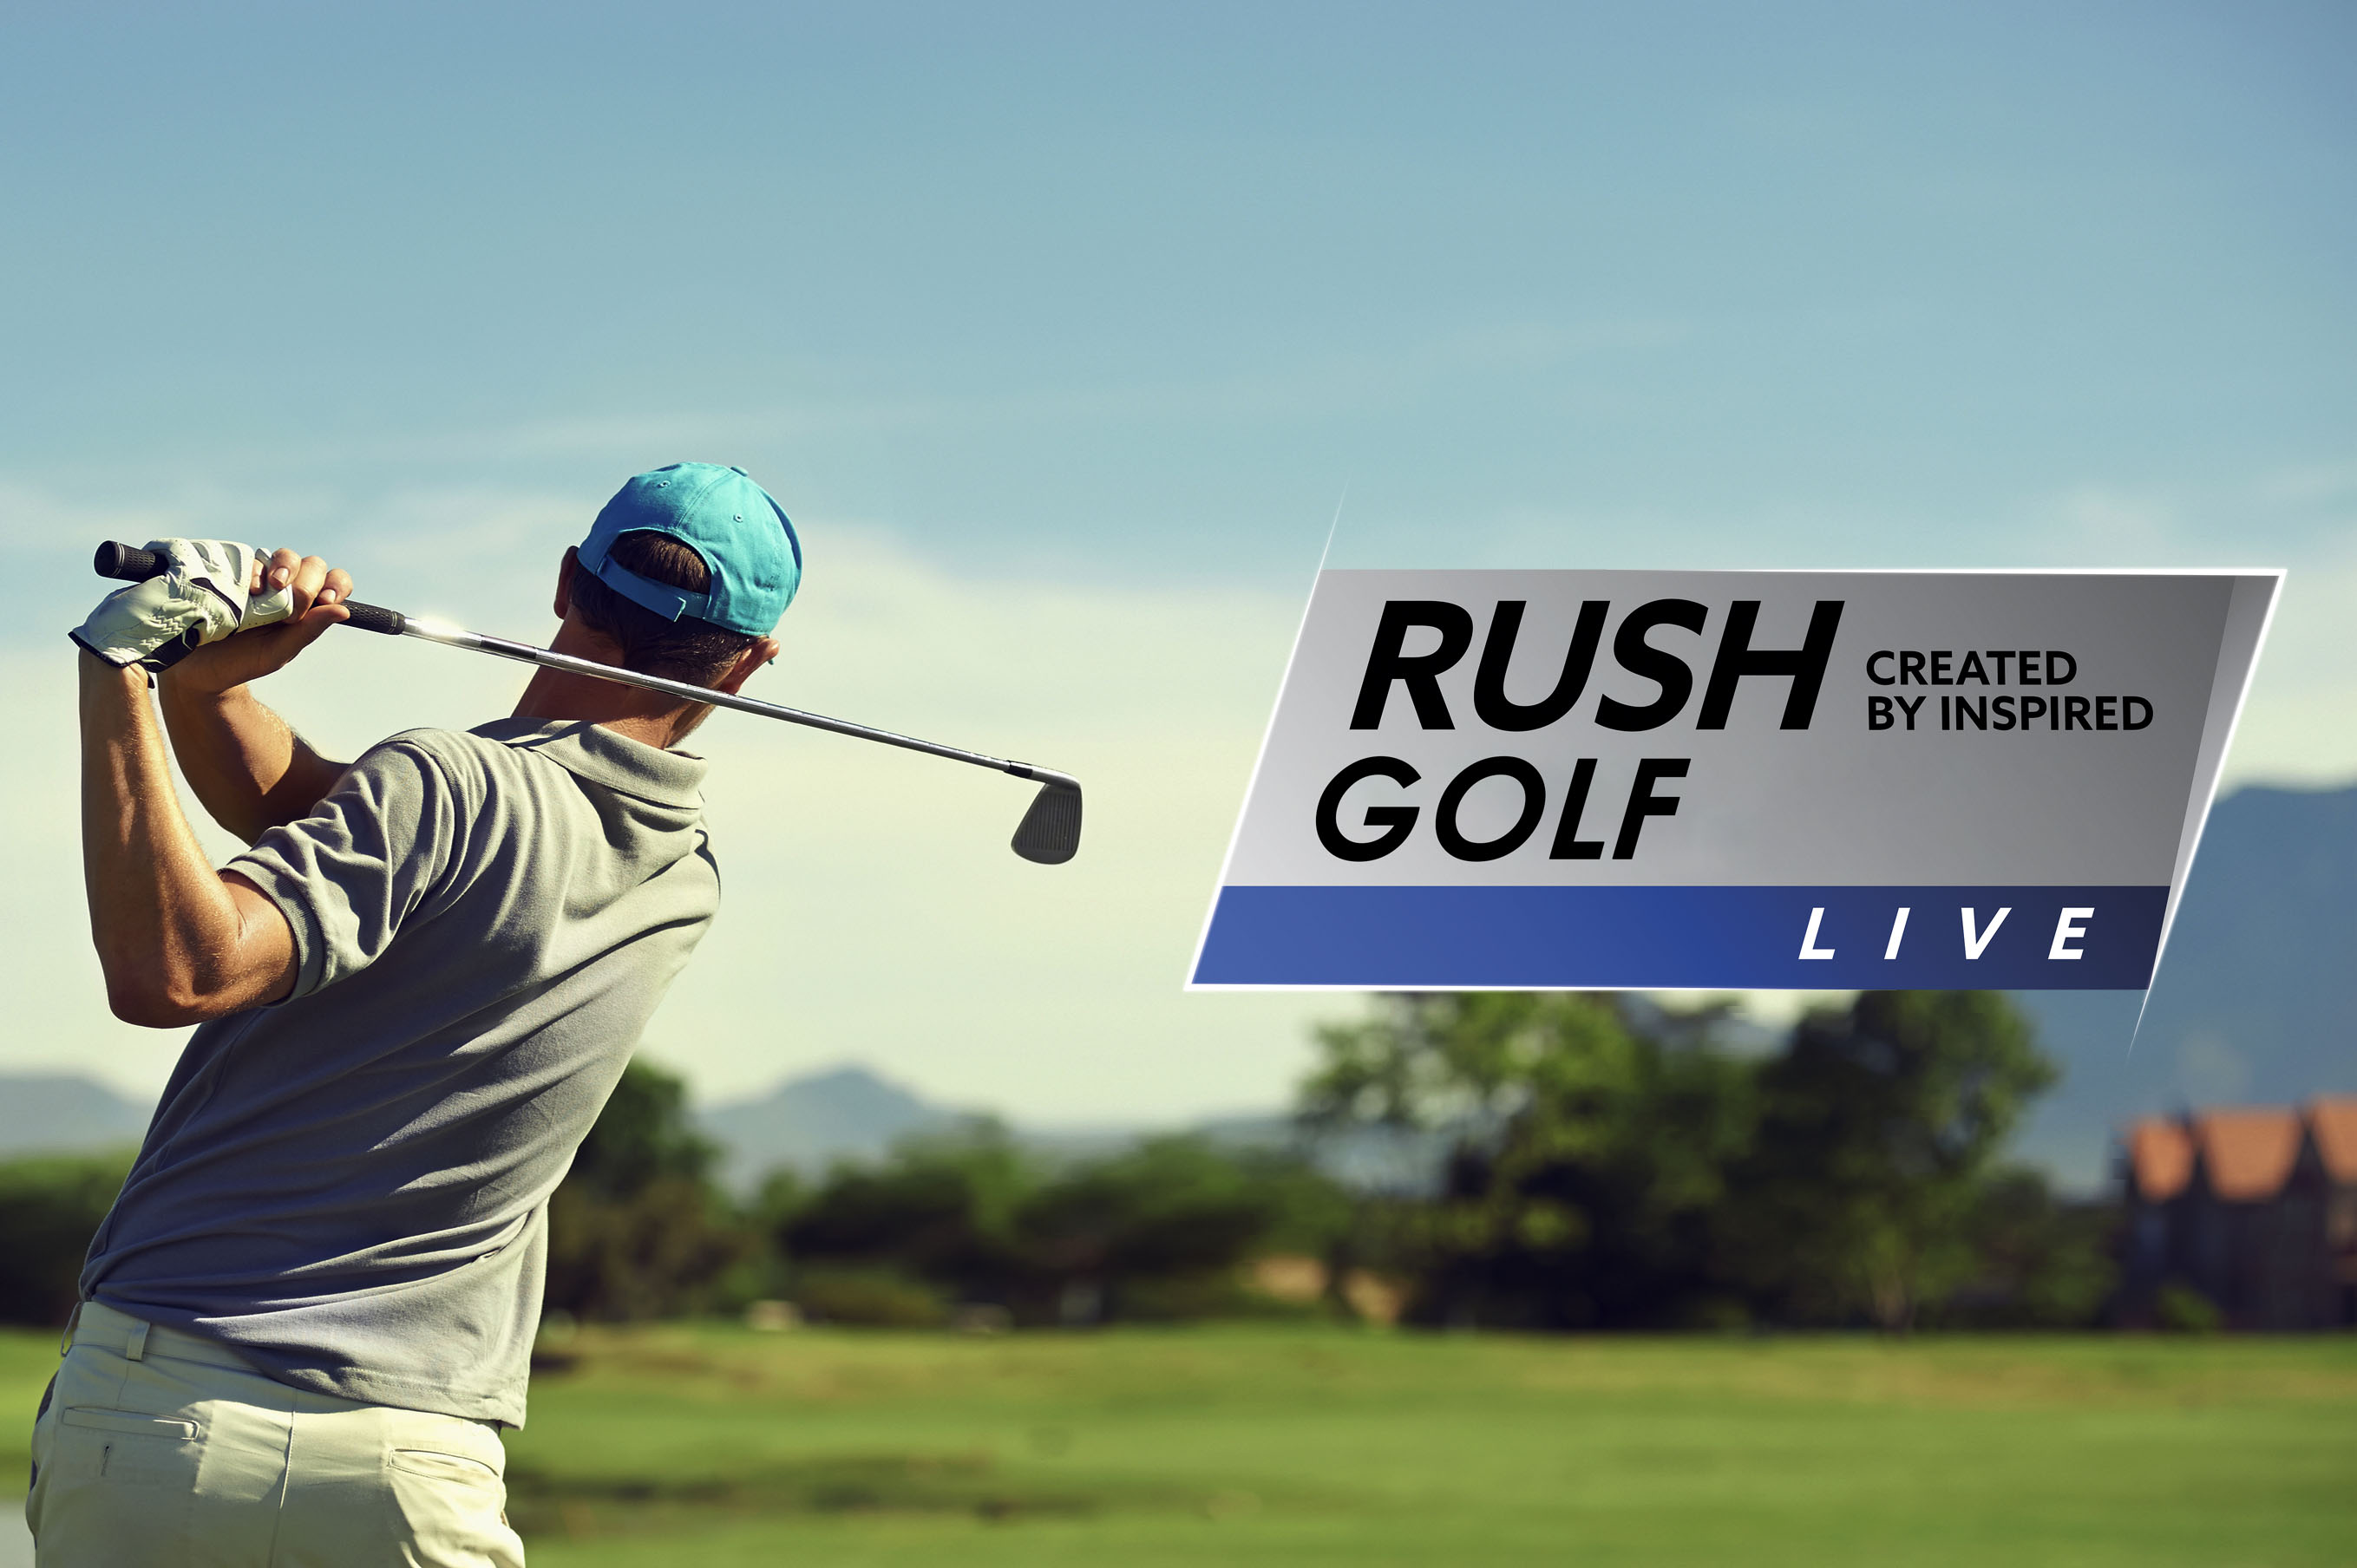 Inspired’s Rush Golf for Betfred